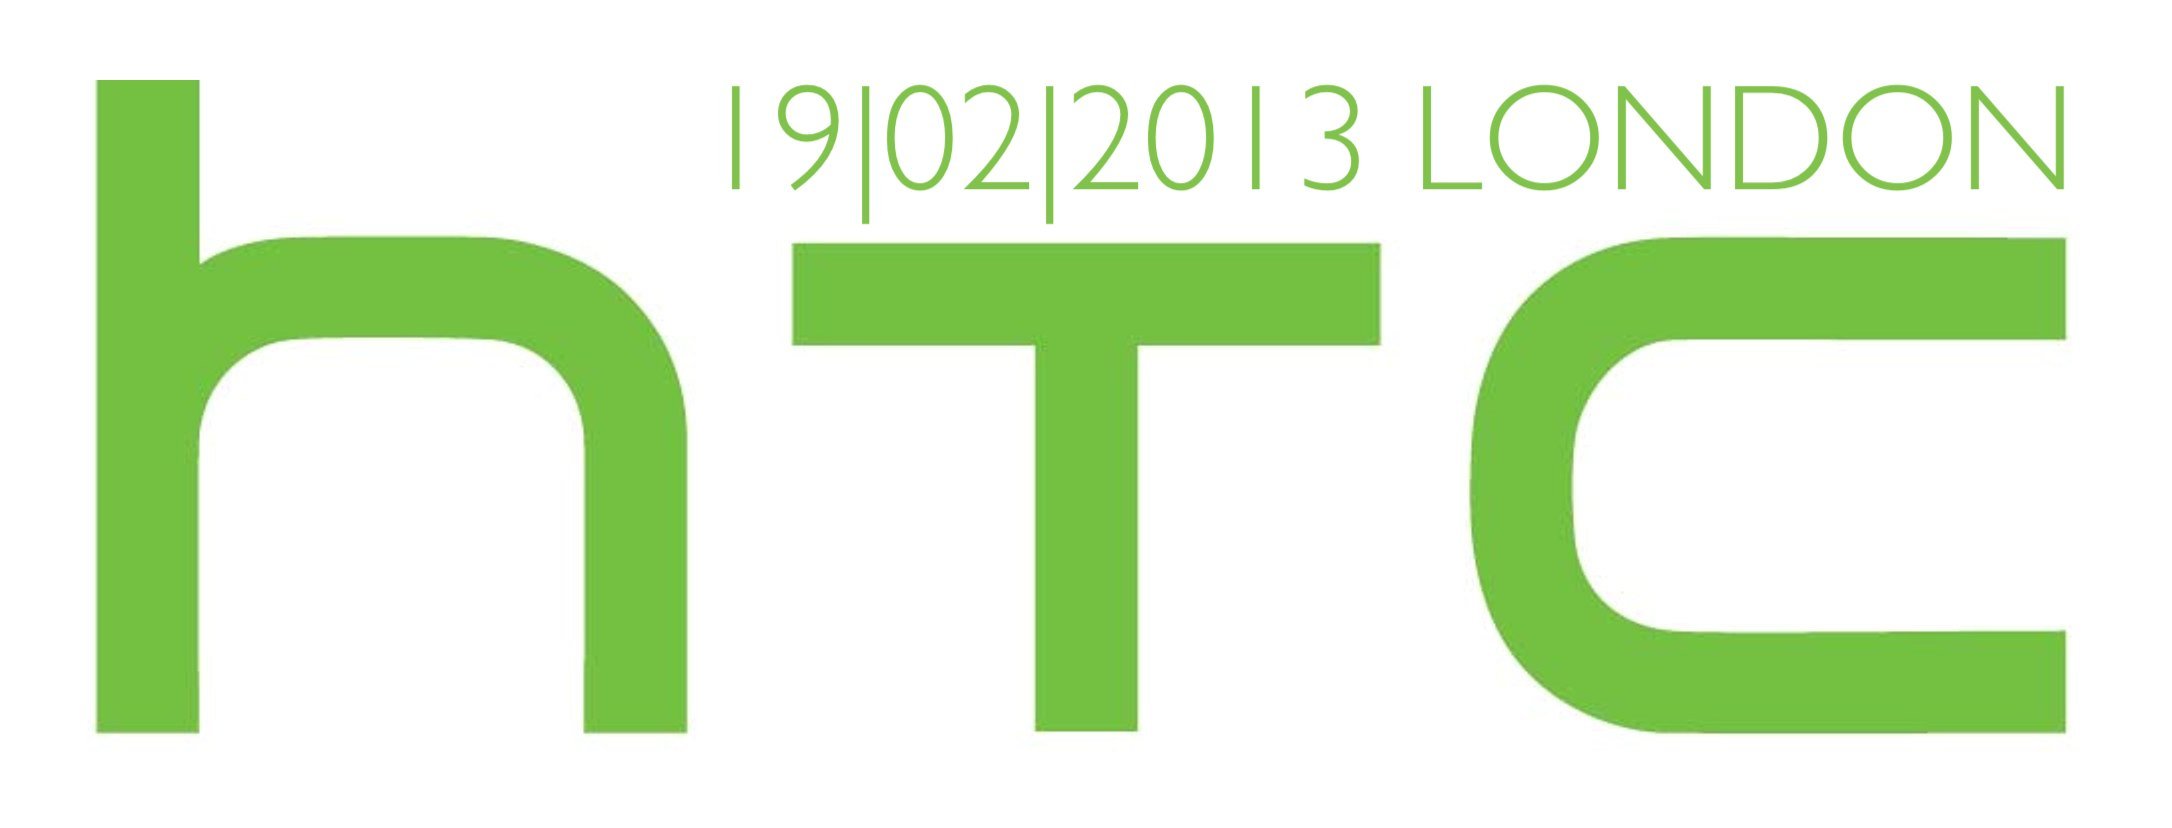 Трансляция мероприятия HTC, Лондон, 19.02.2013